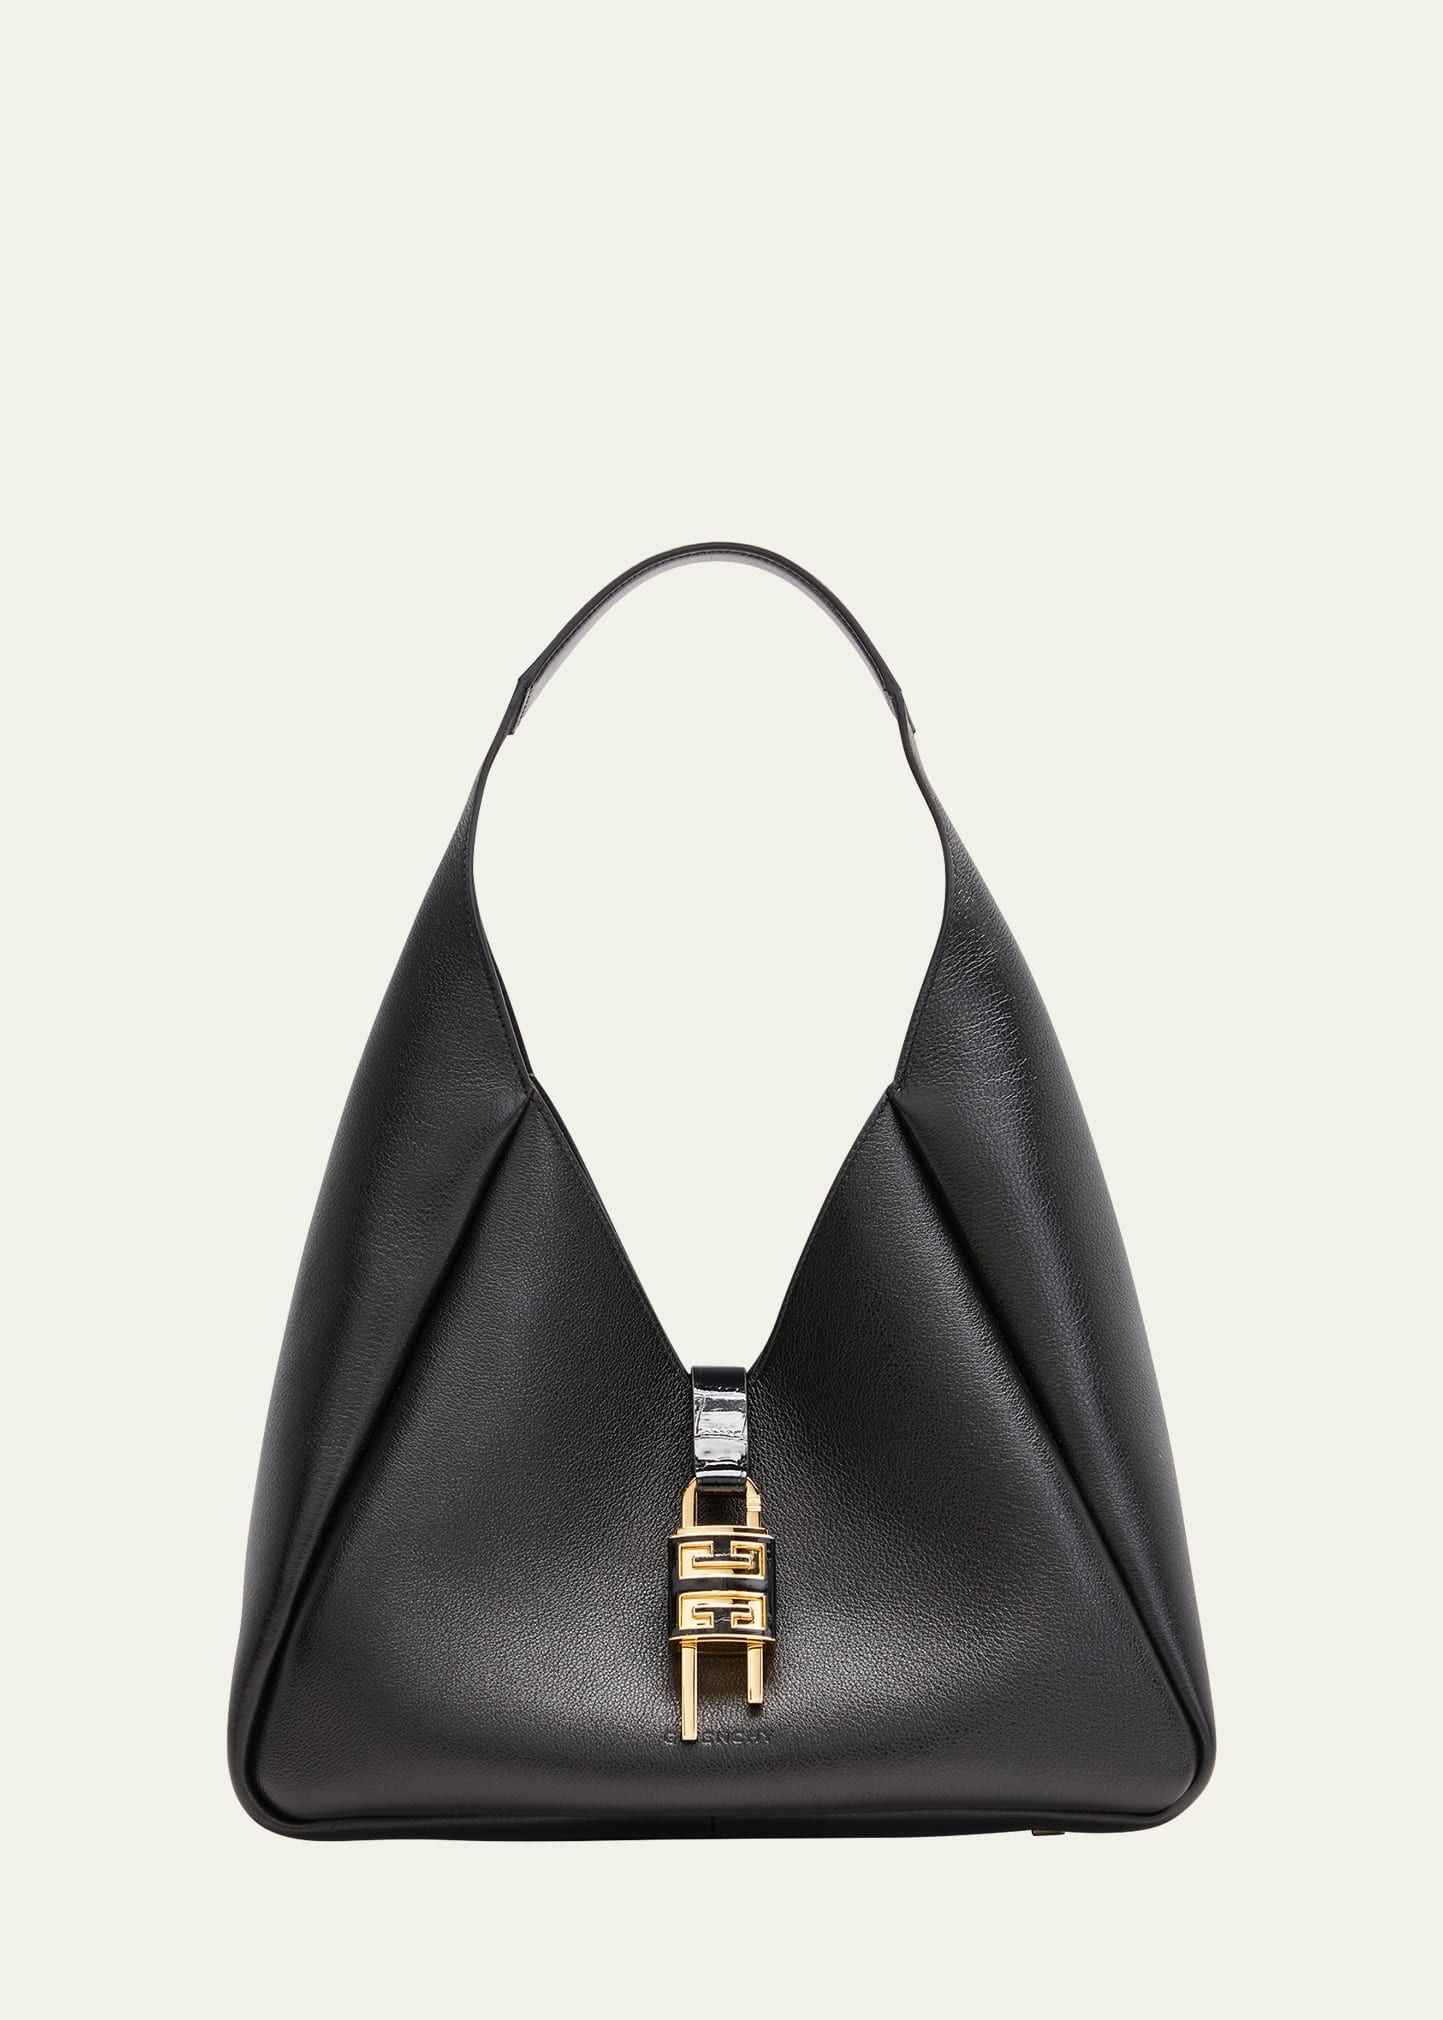 Givenchy Antigona Soft Medium Leather Bag - Bergdorf Goodman